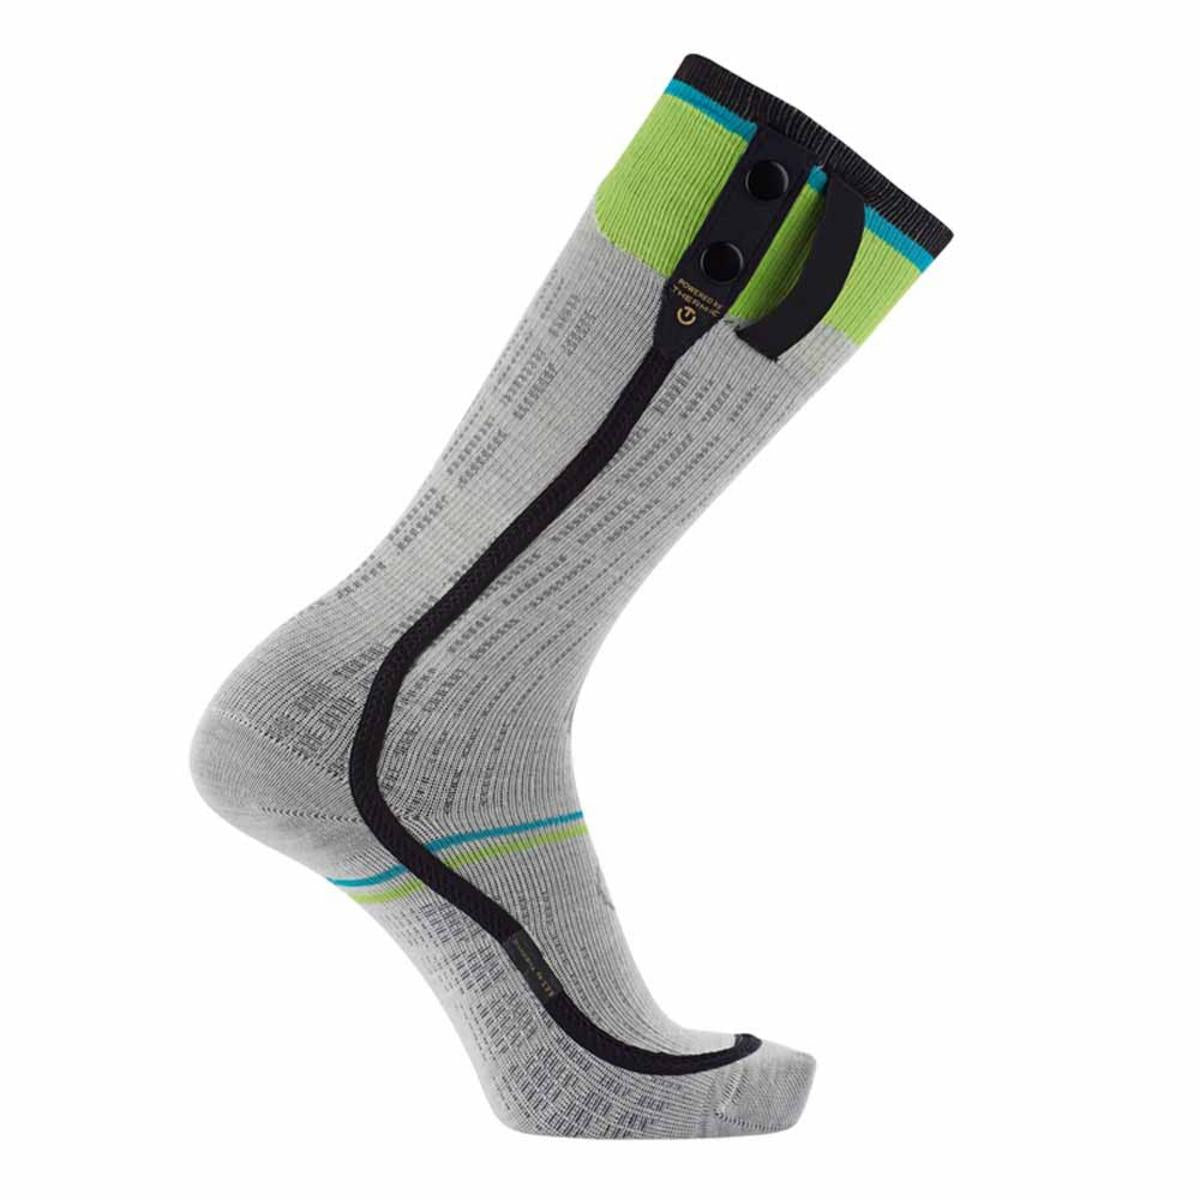 Sidas Ski Heat Athletes Race Sock S.E.T (Socks Only)